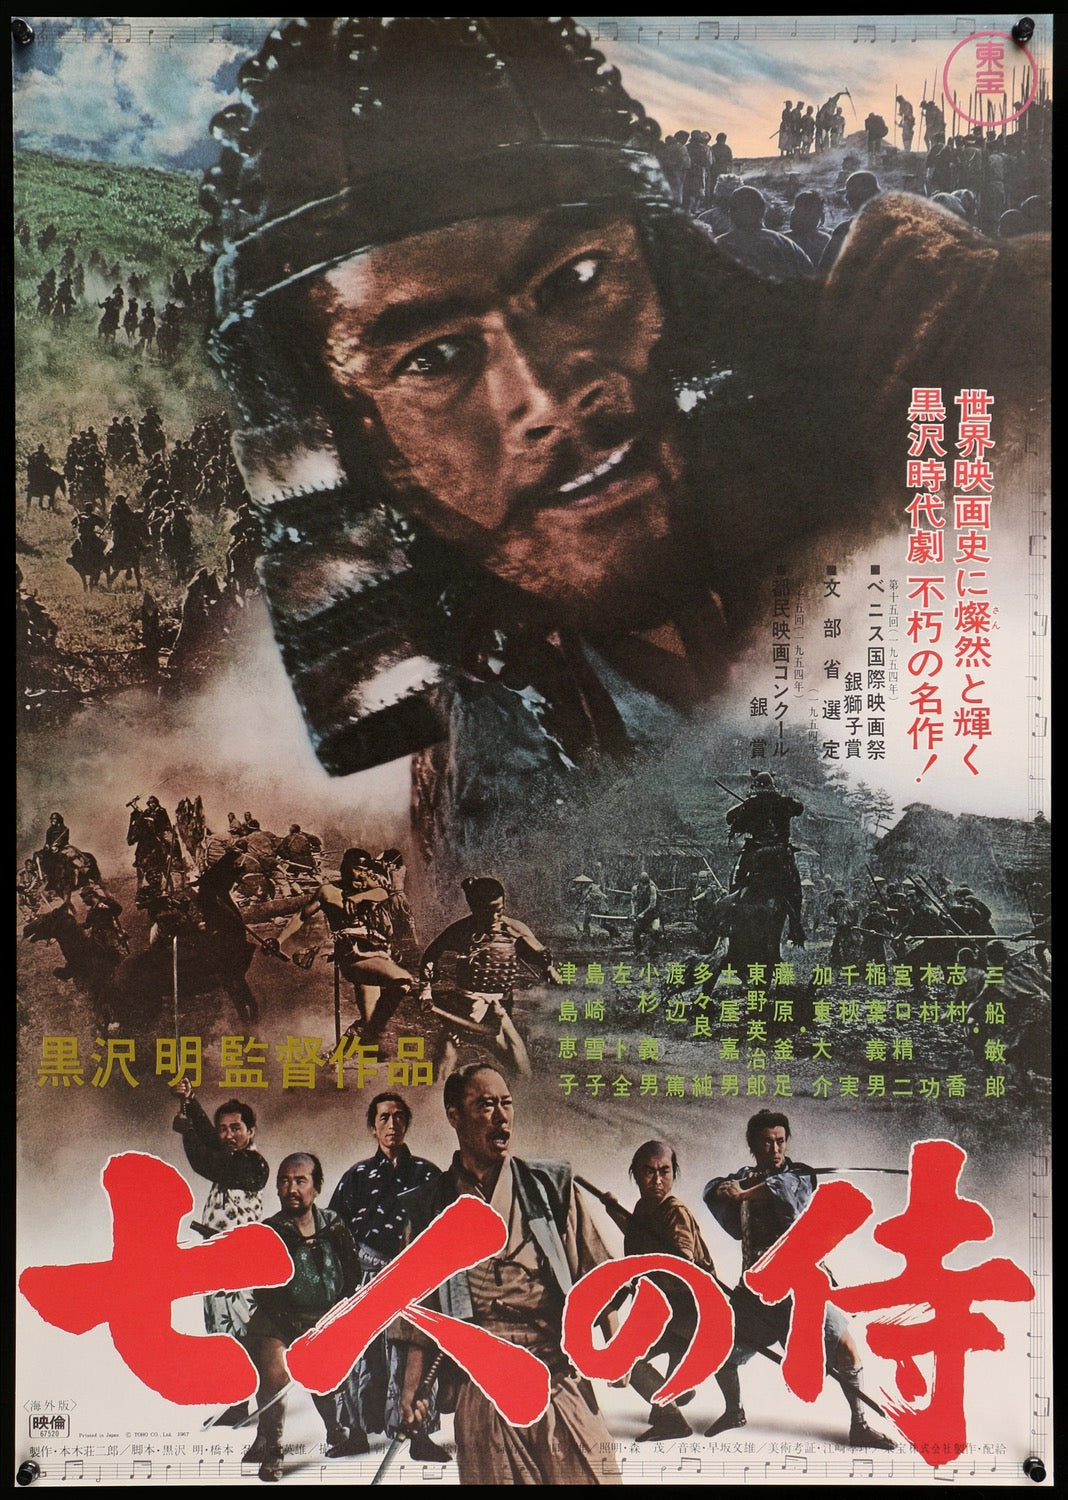 Seven Samurai (1954) original movie poster for sale at Original Film Art